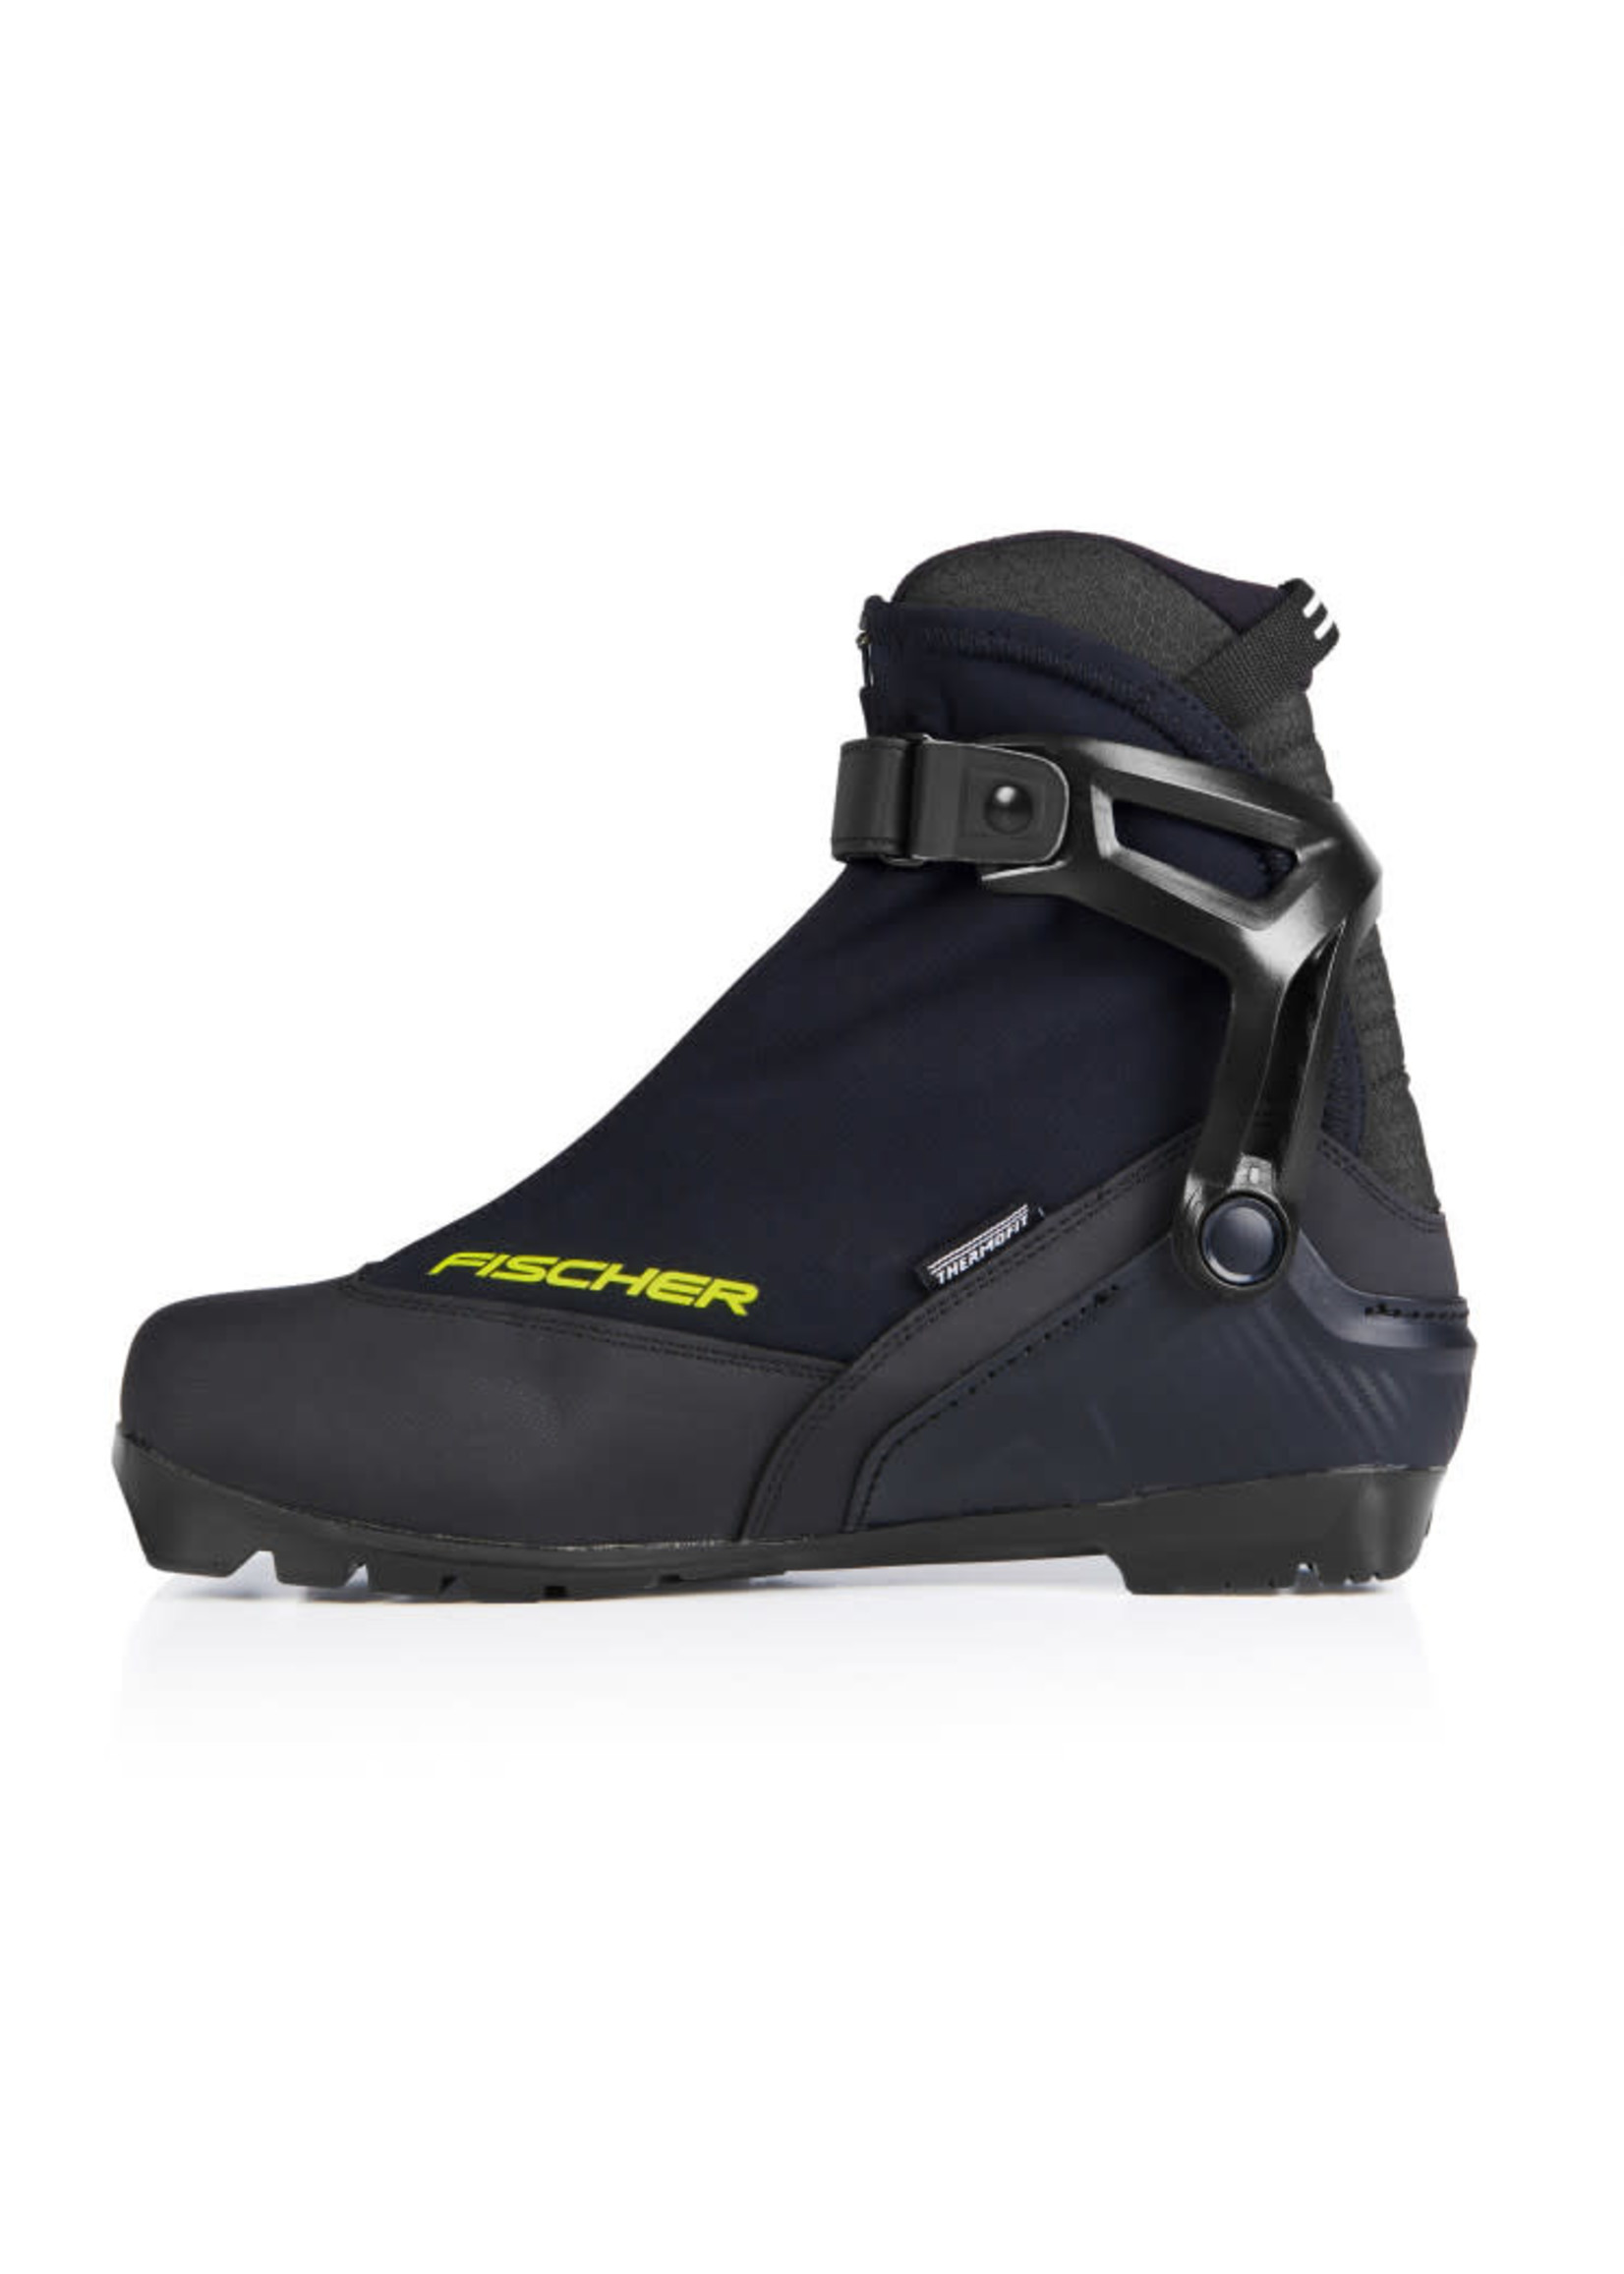 Fischer Fischer Cross Country Ski Boots RC 3 Skate Black/Yellow